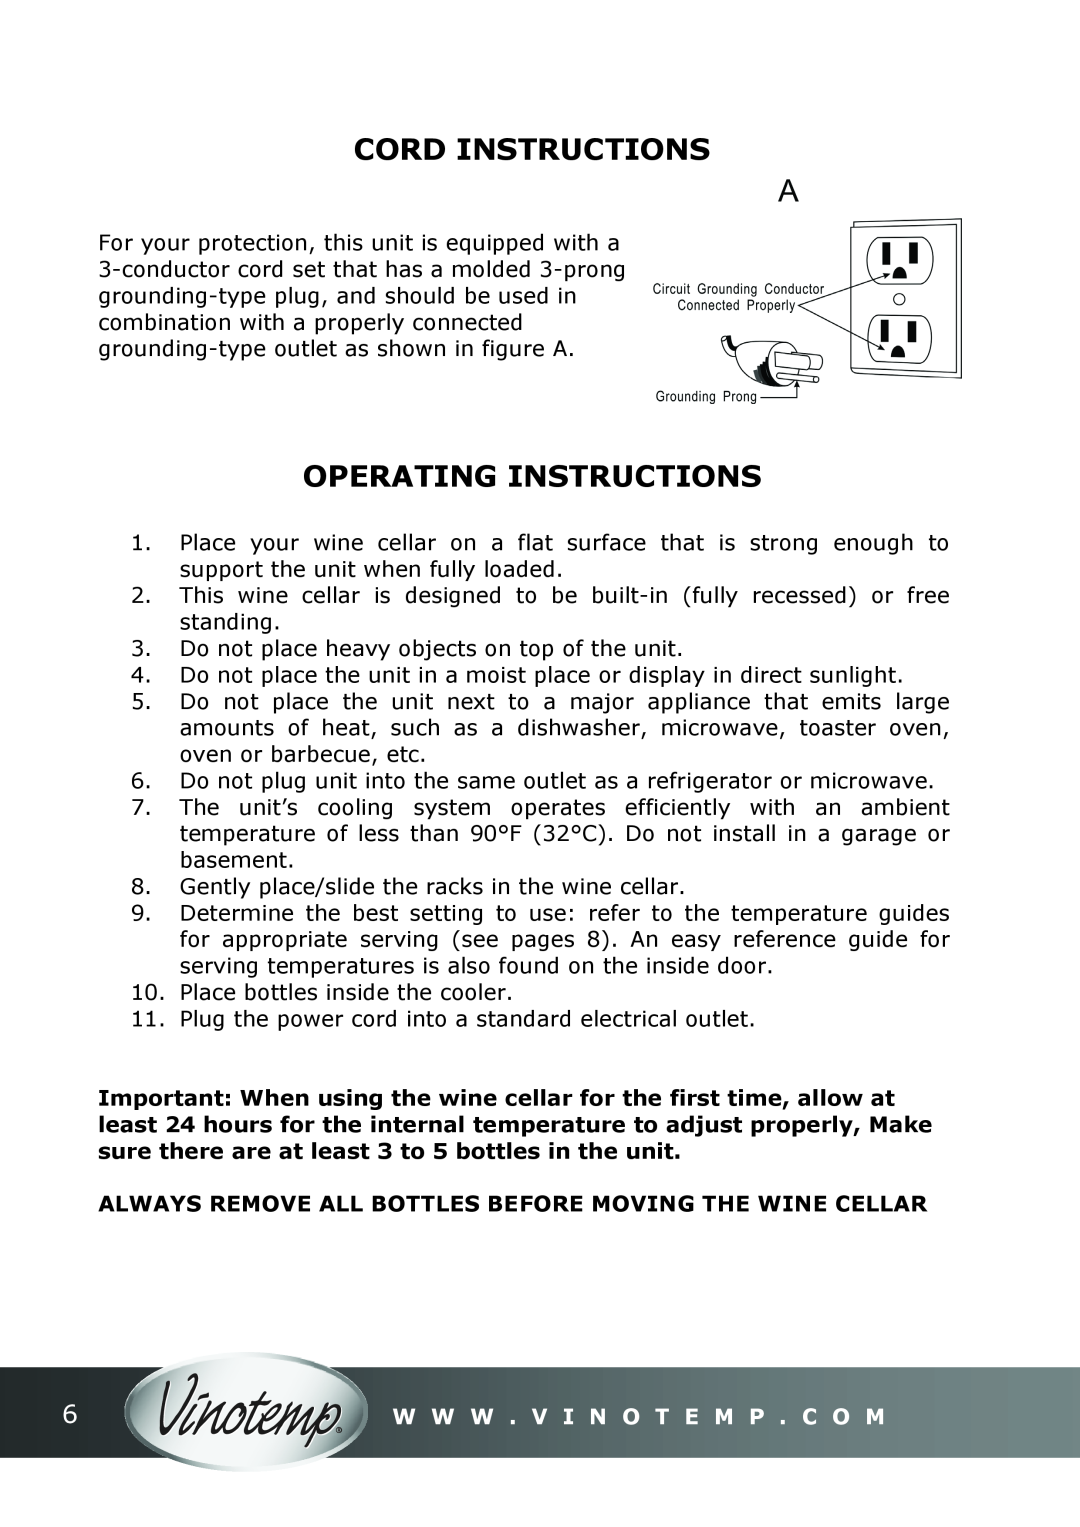 Vinotemp VT-45R instruction manual Cord Instructions, Operating Instructions, W W W . V I N O T E M P . C O M 